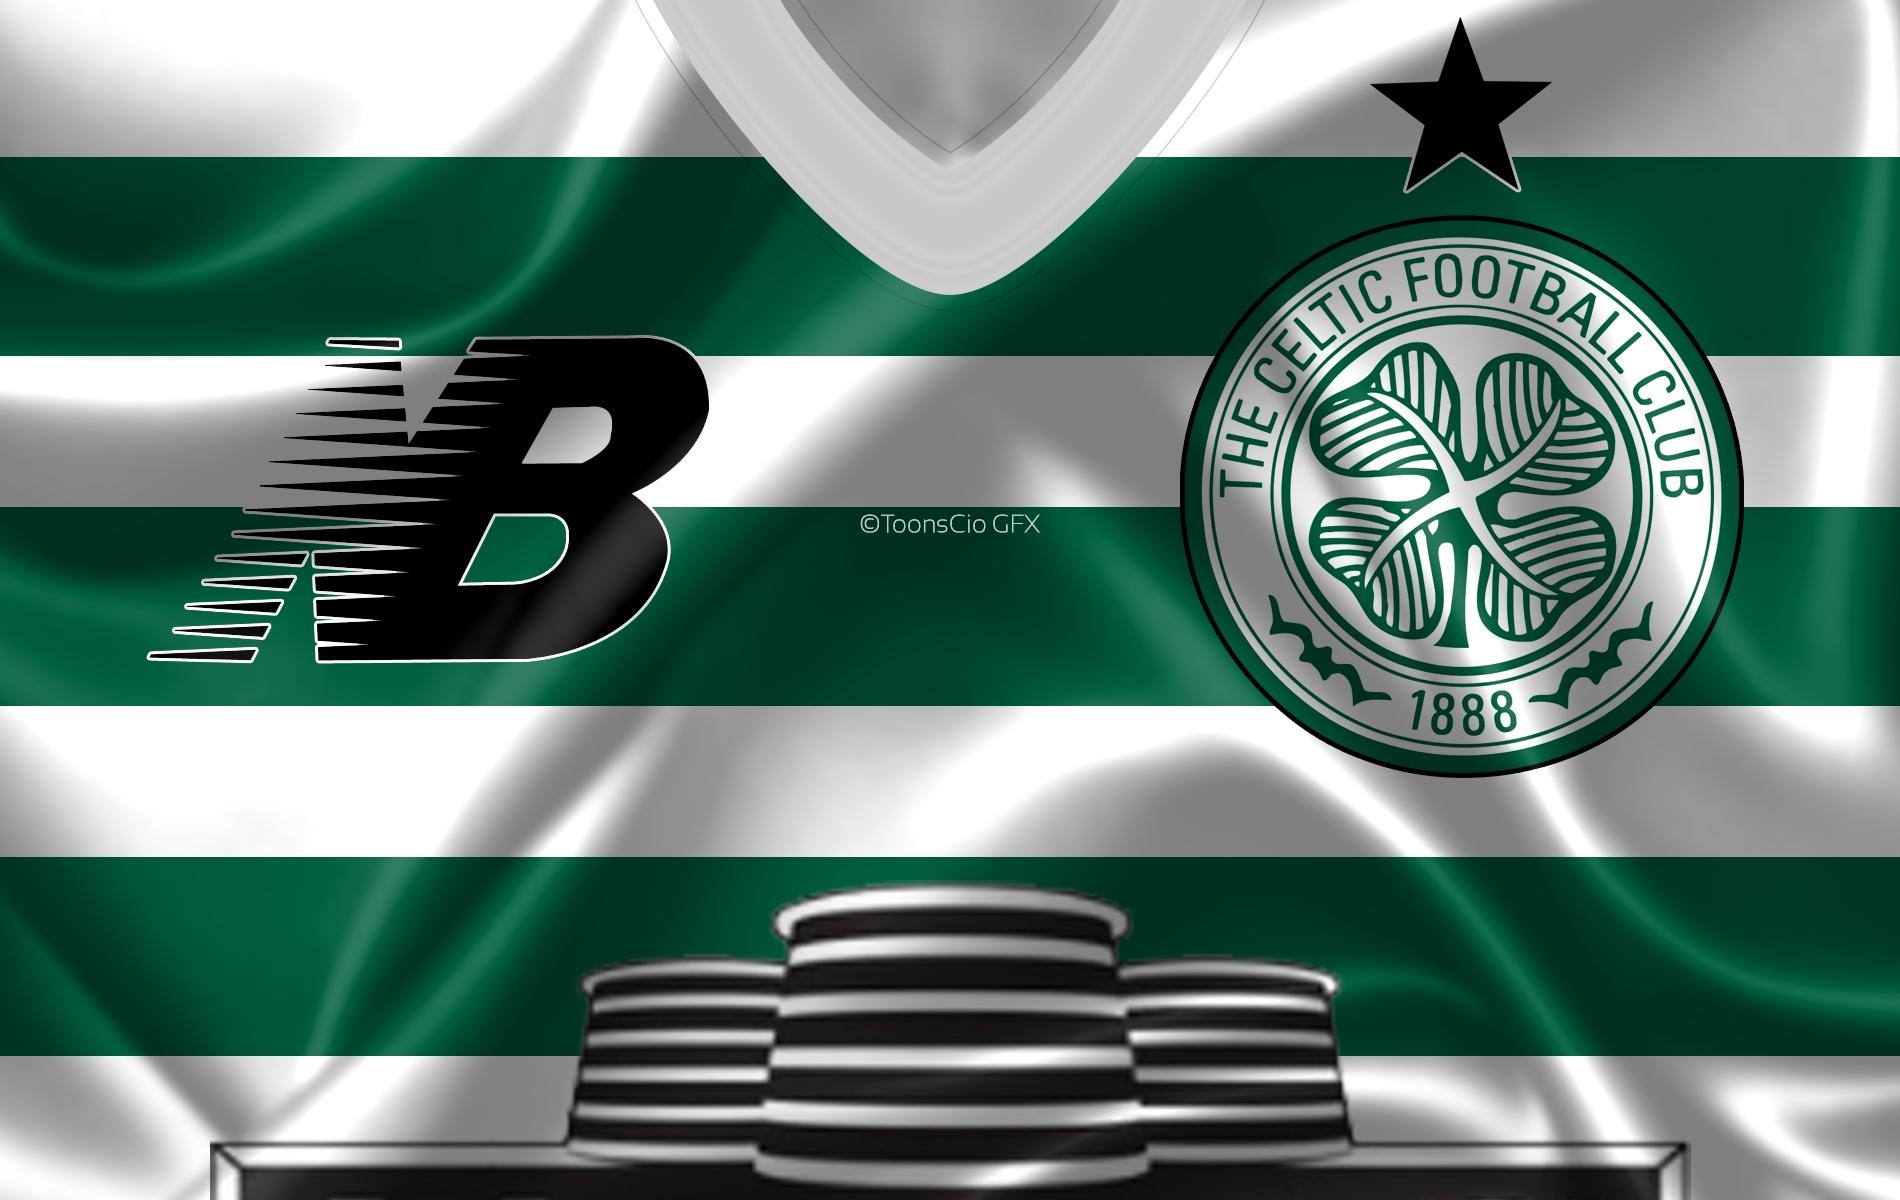 Beautiful Celtic Fc iPhone Wallpaper. Great Foofball Club